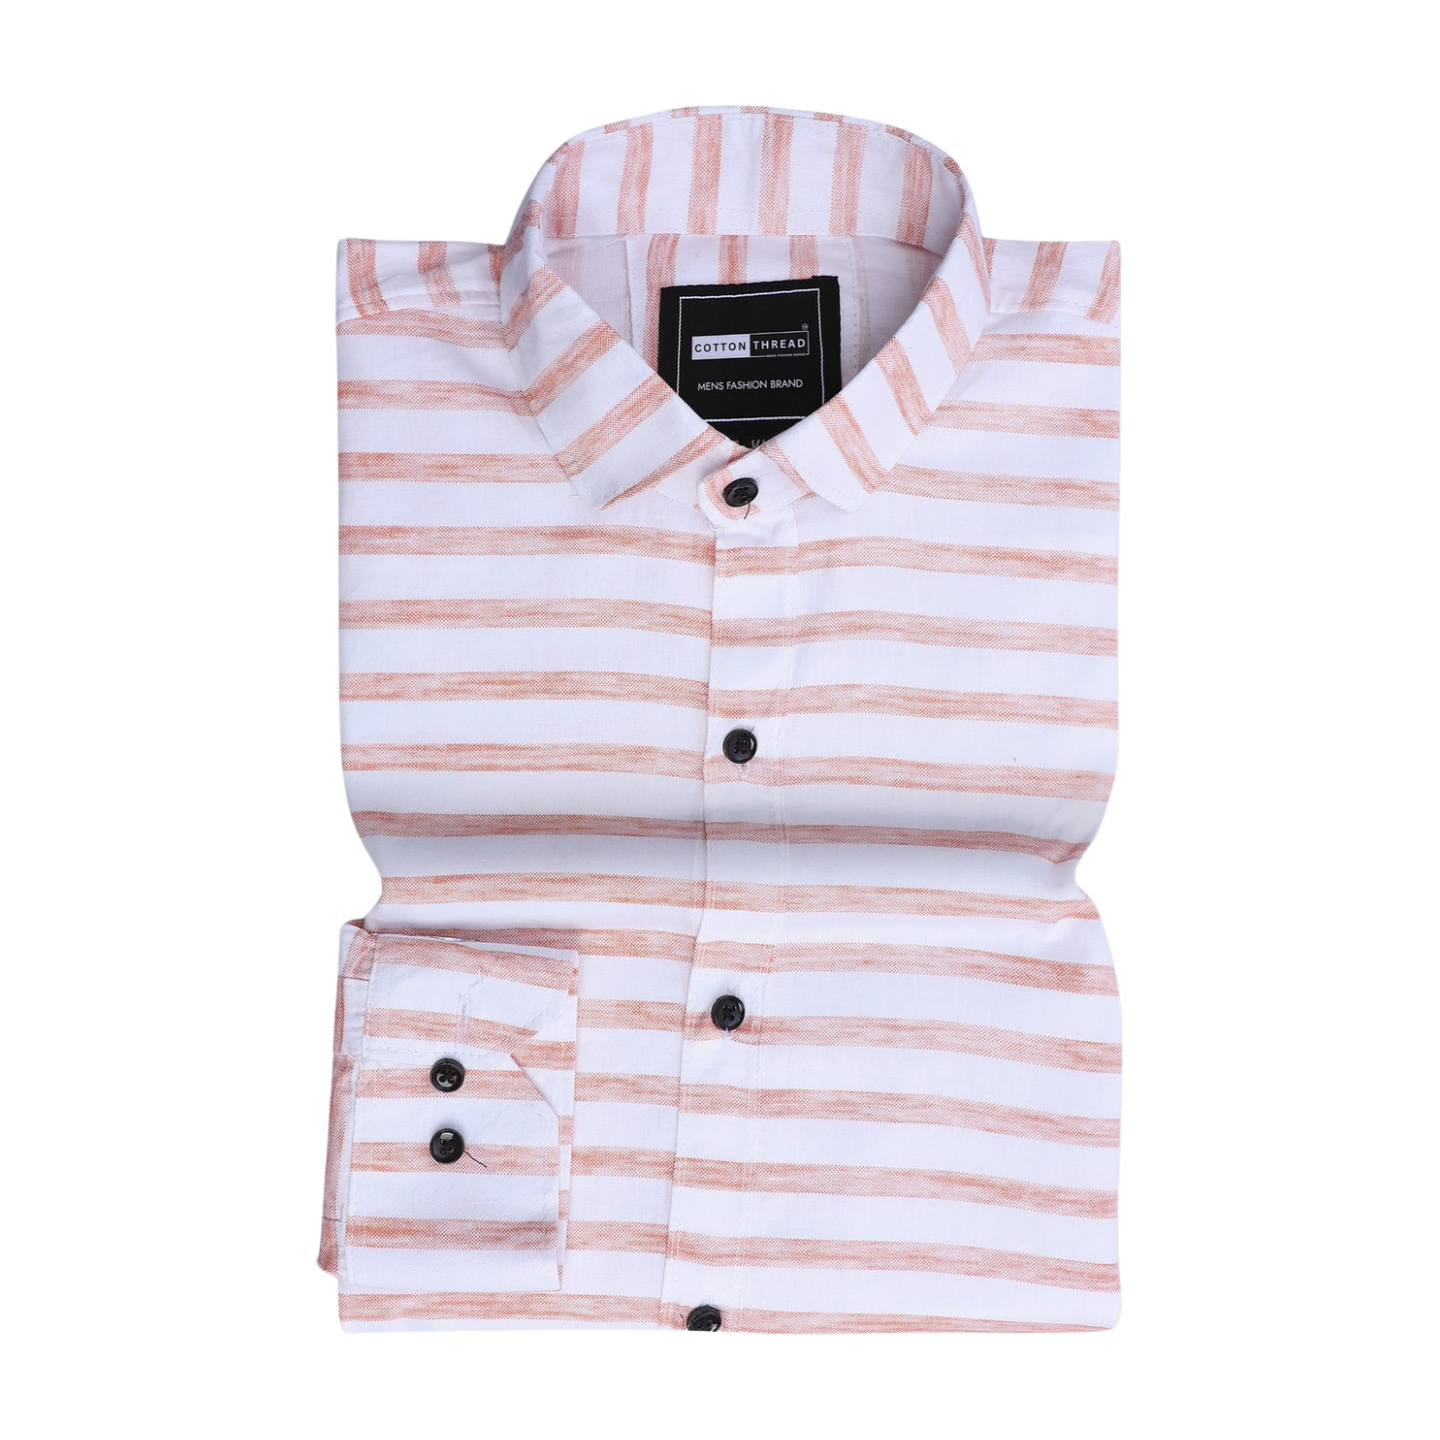 Men's Premium Formal Full Sleeve Pink Striped Shirt By Cotton Thread (STR-002)